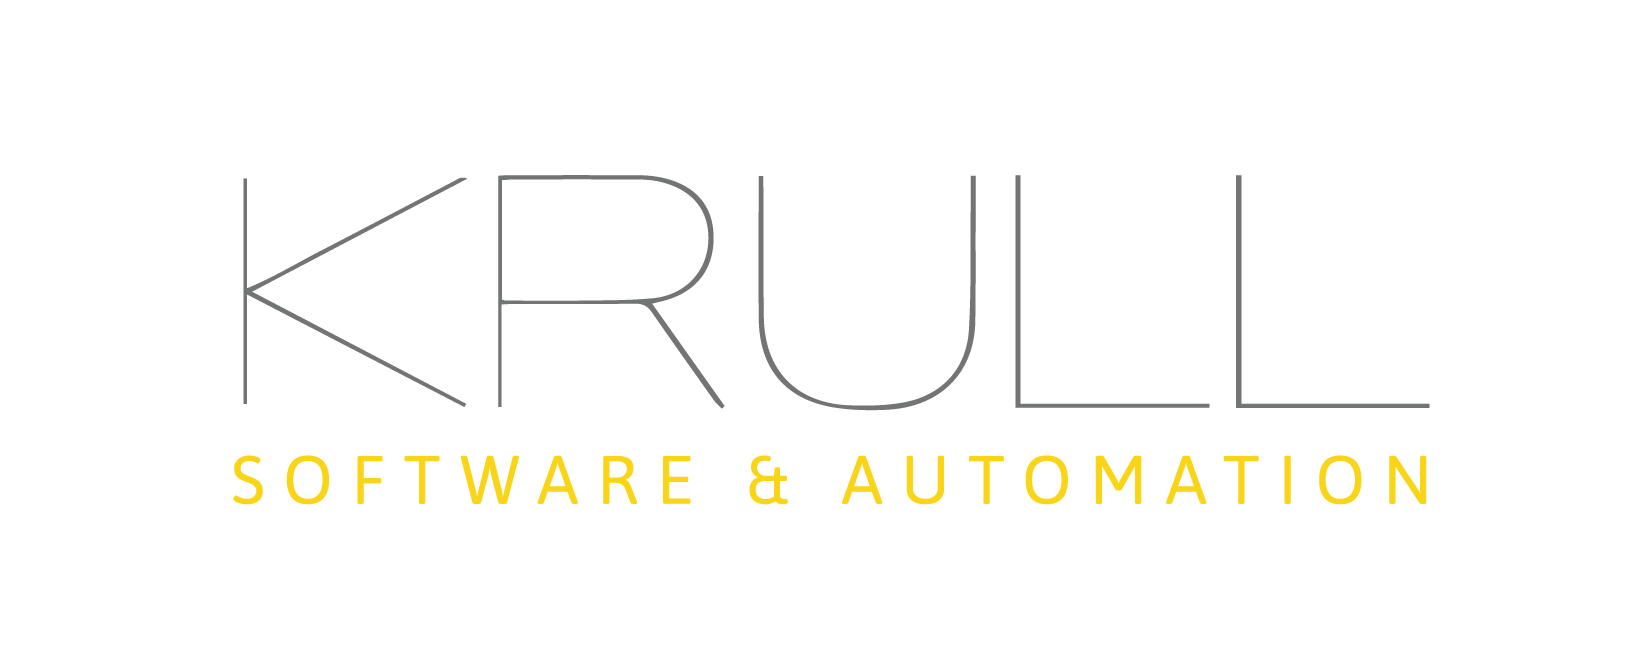 Krull Software & Automation GmbH